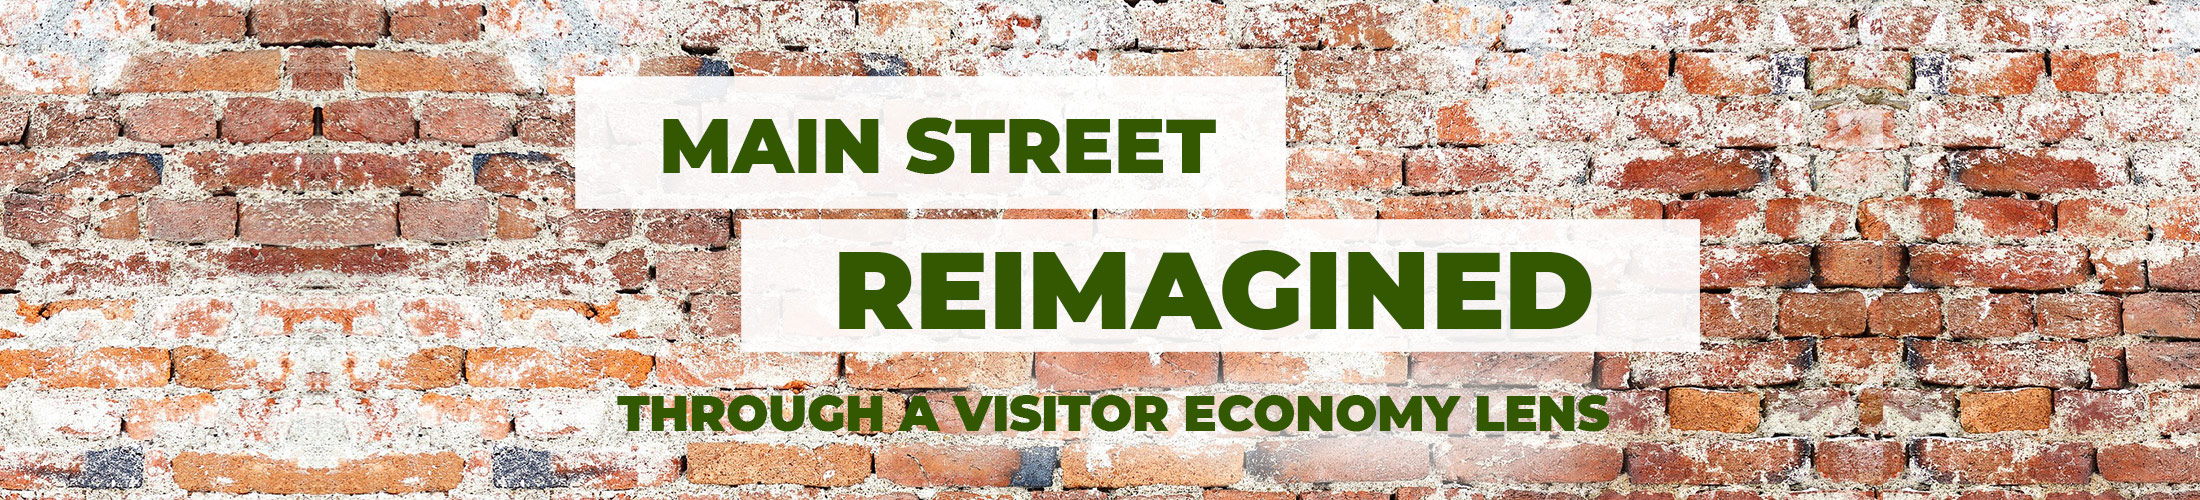 Main Street Reimagined - Through a visitor economy lens